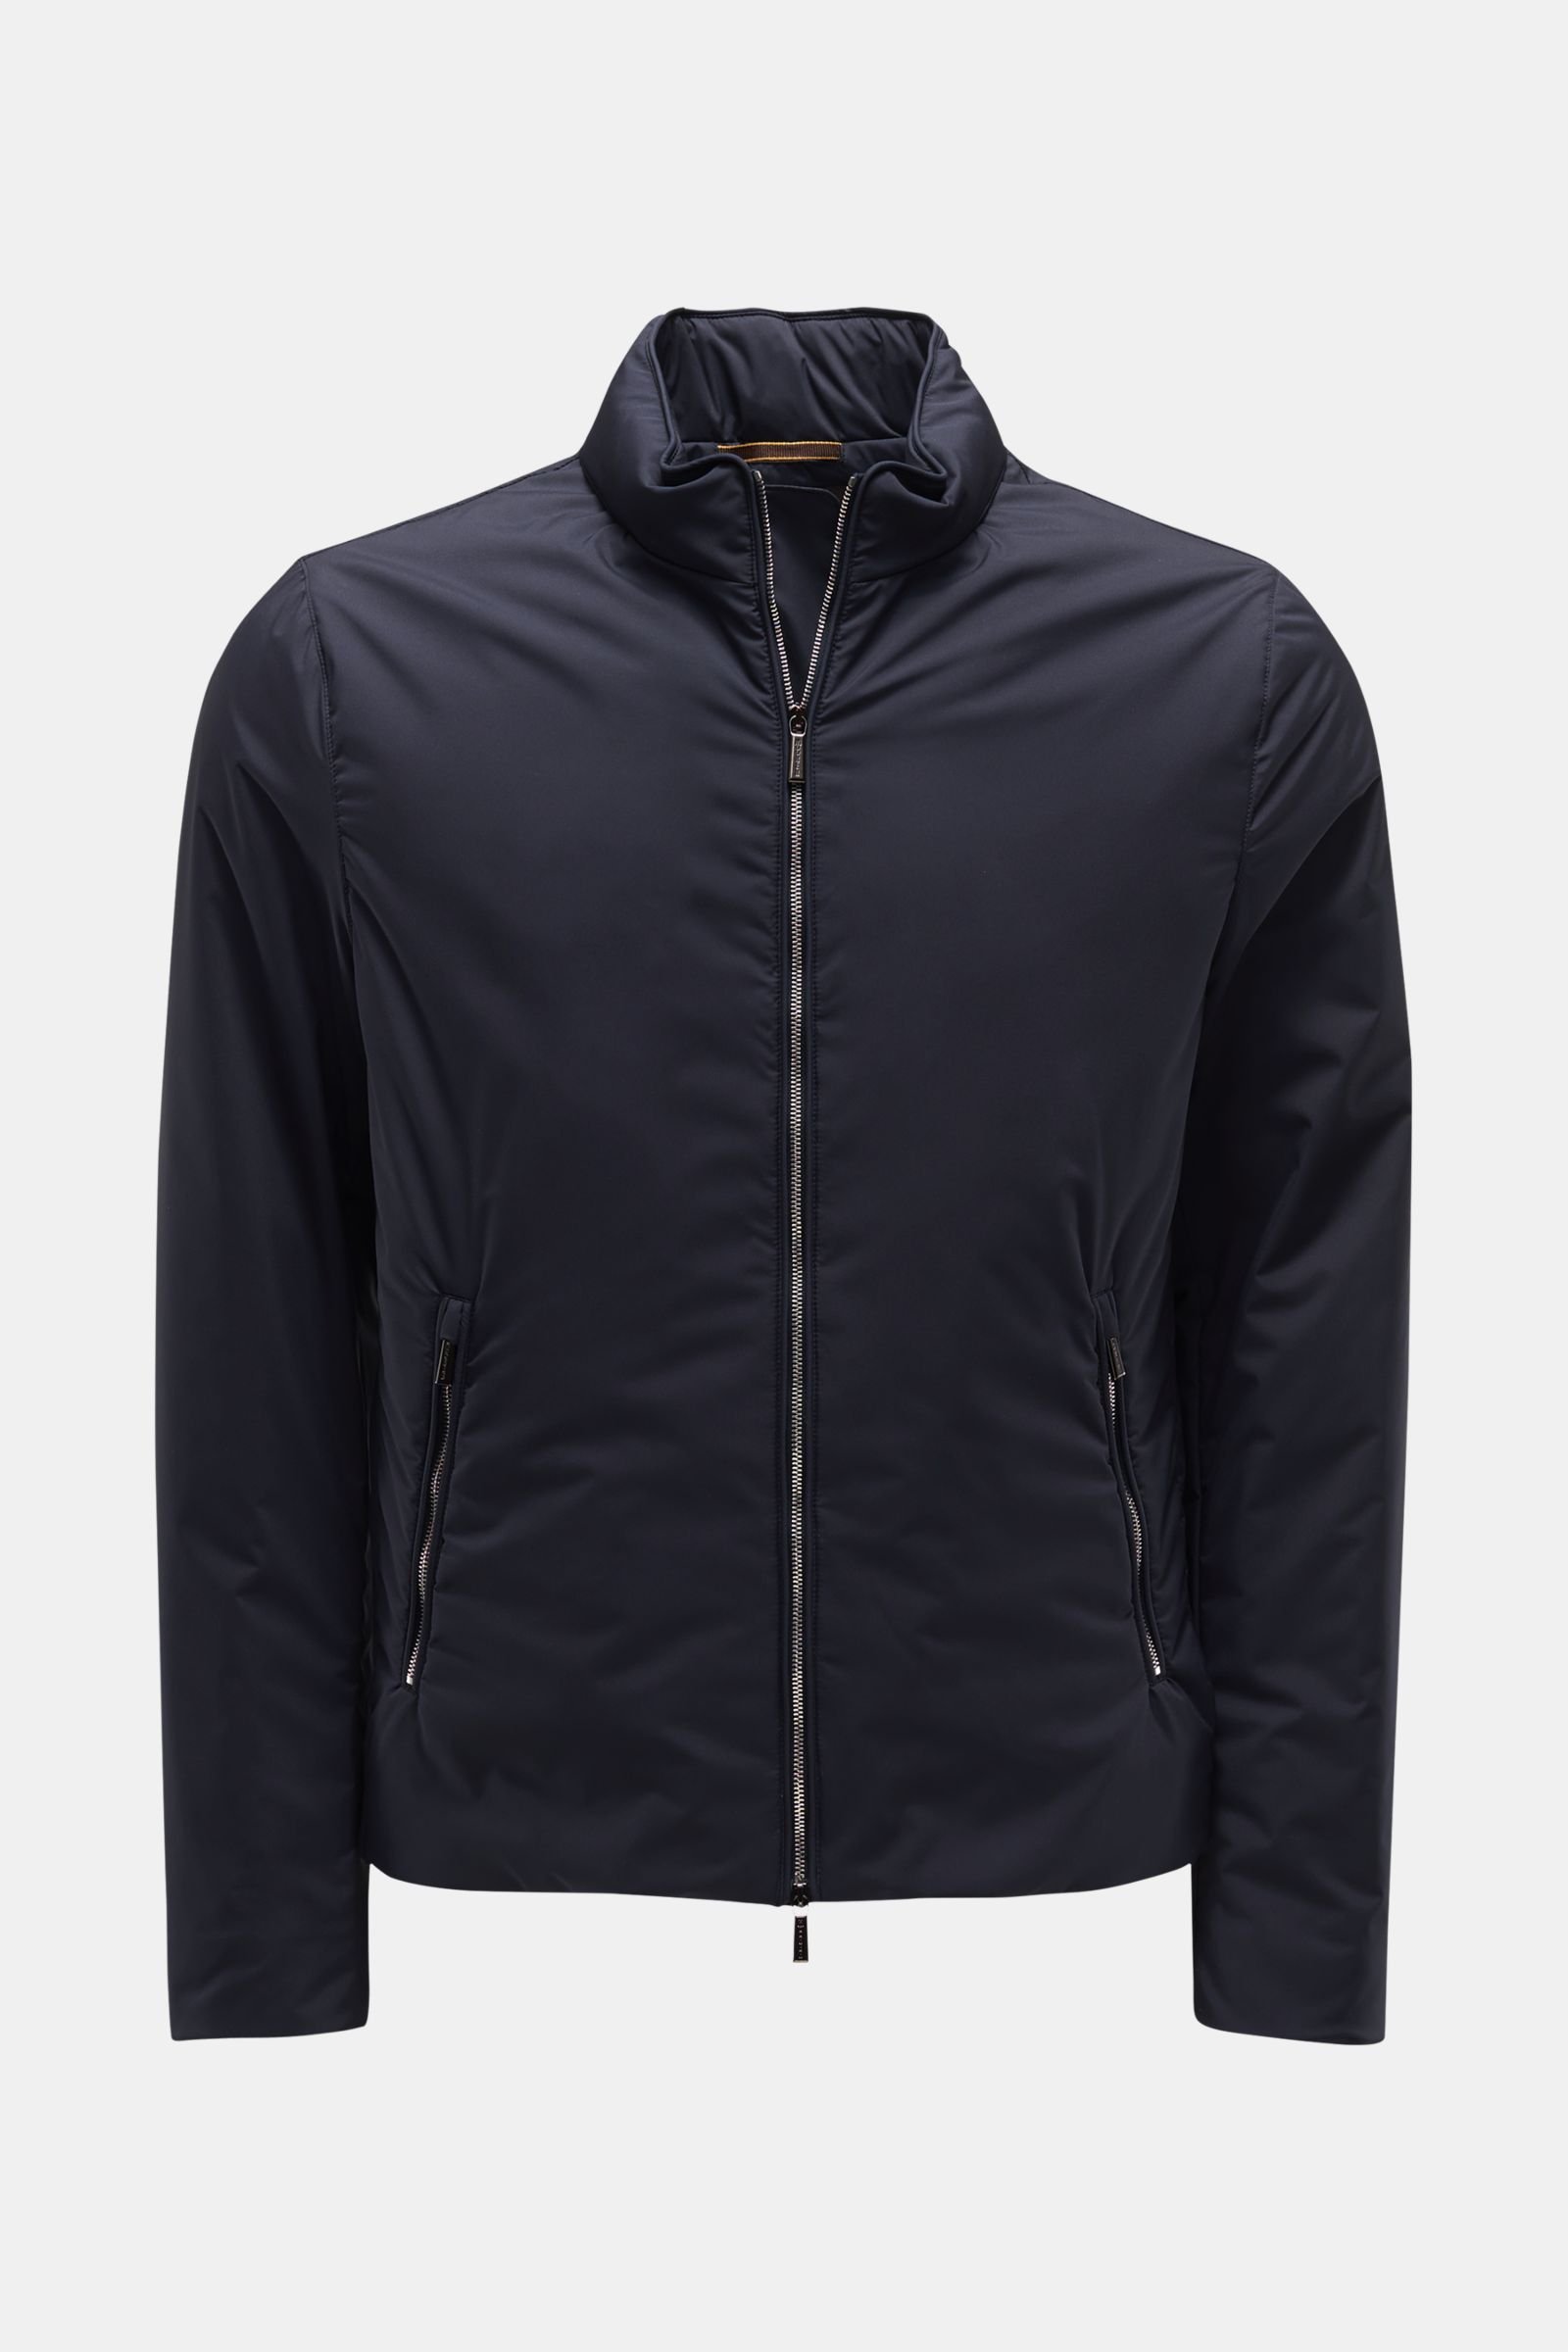 ‘Tristano' jacket navy